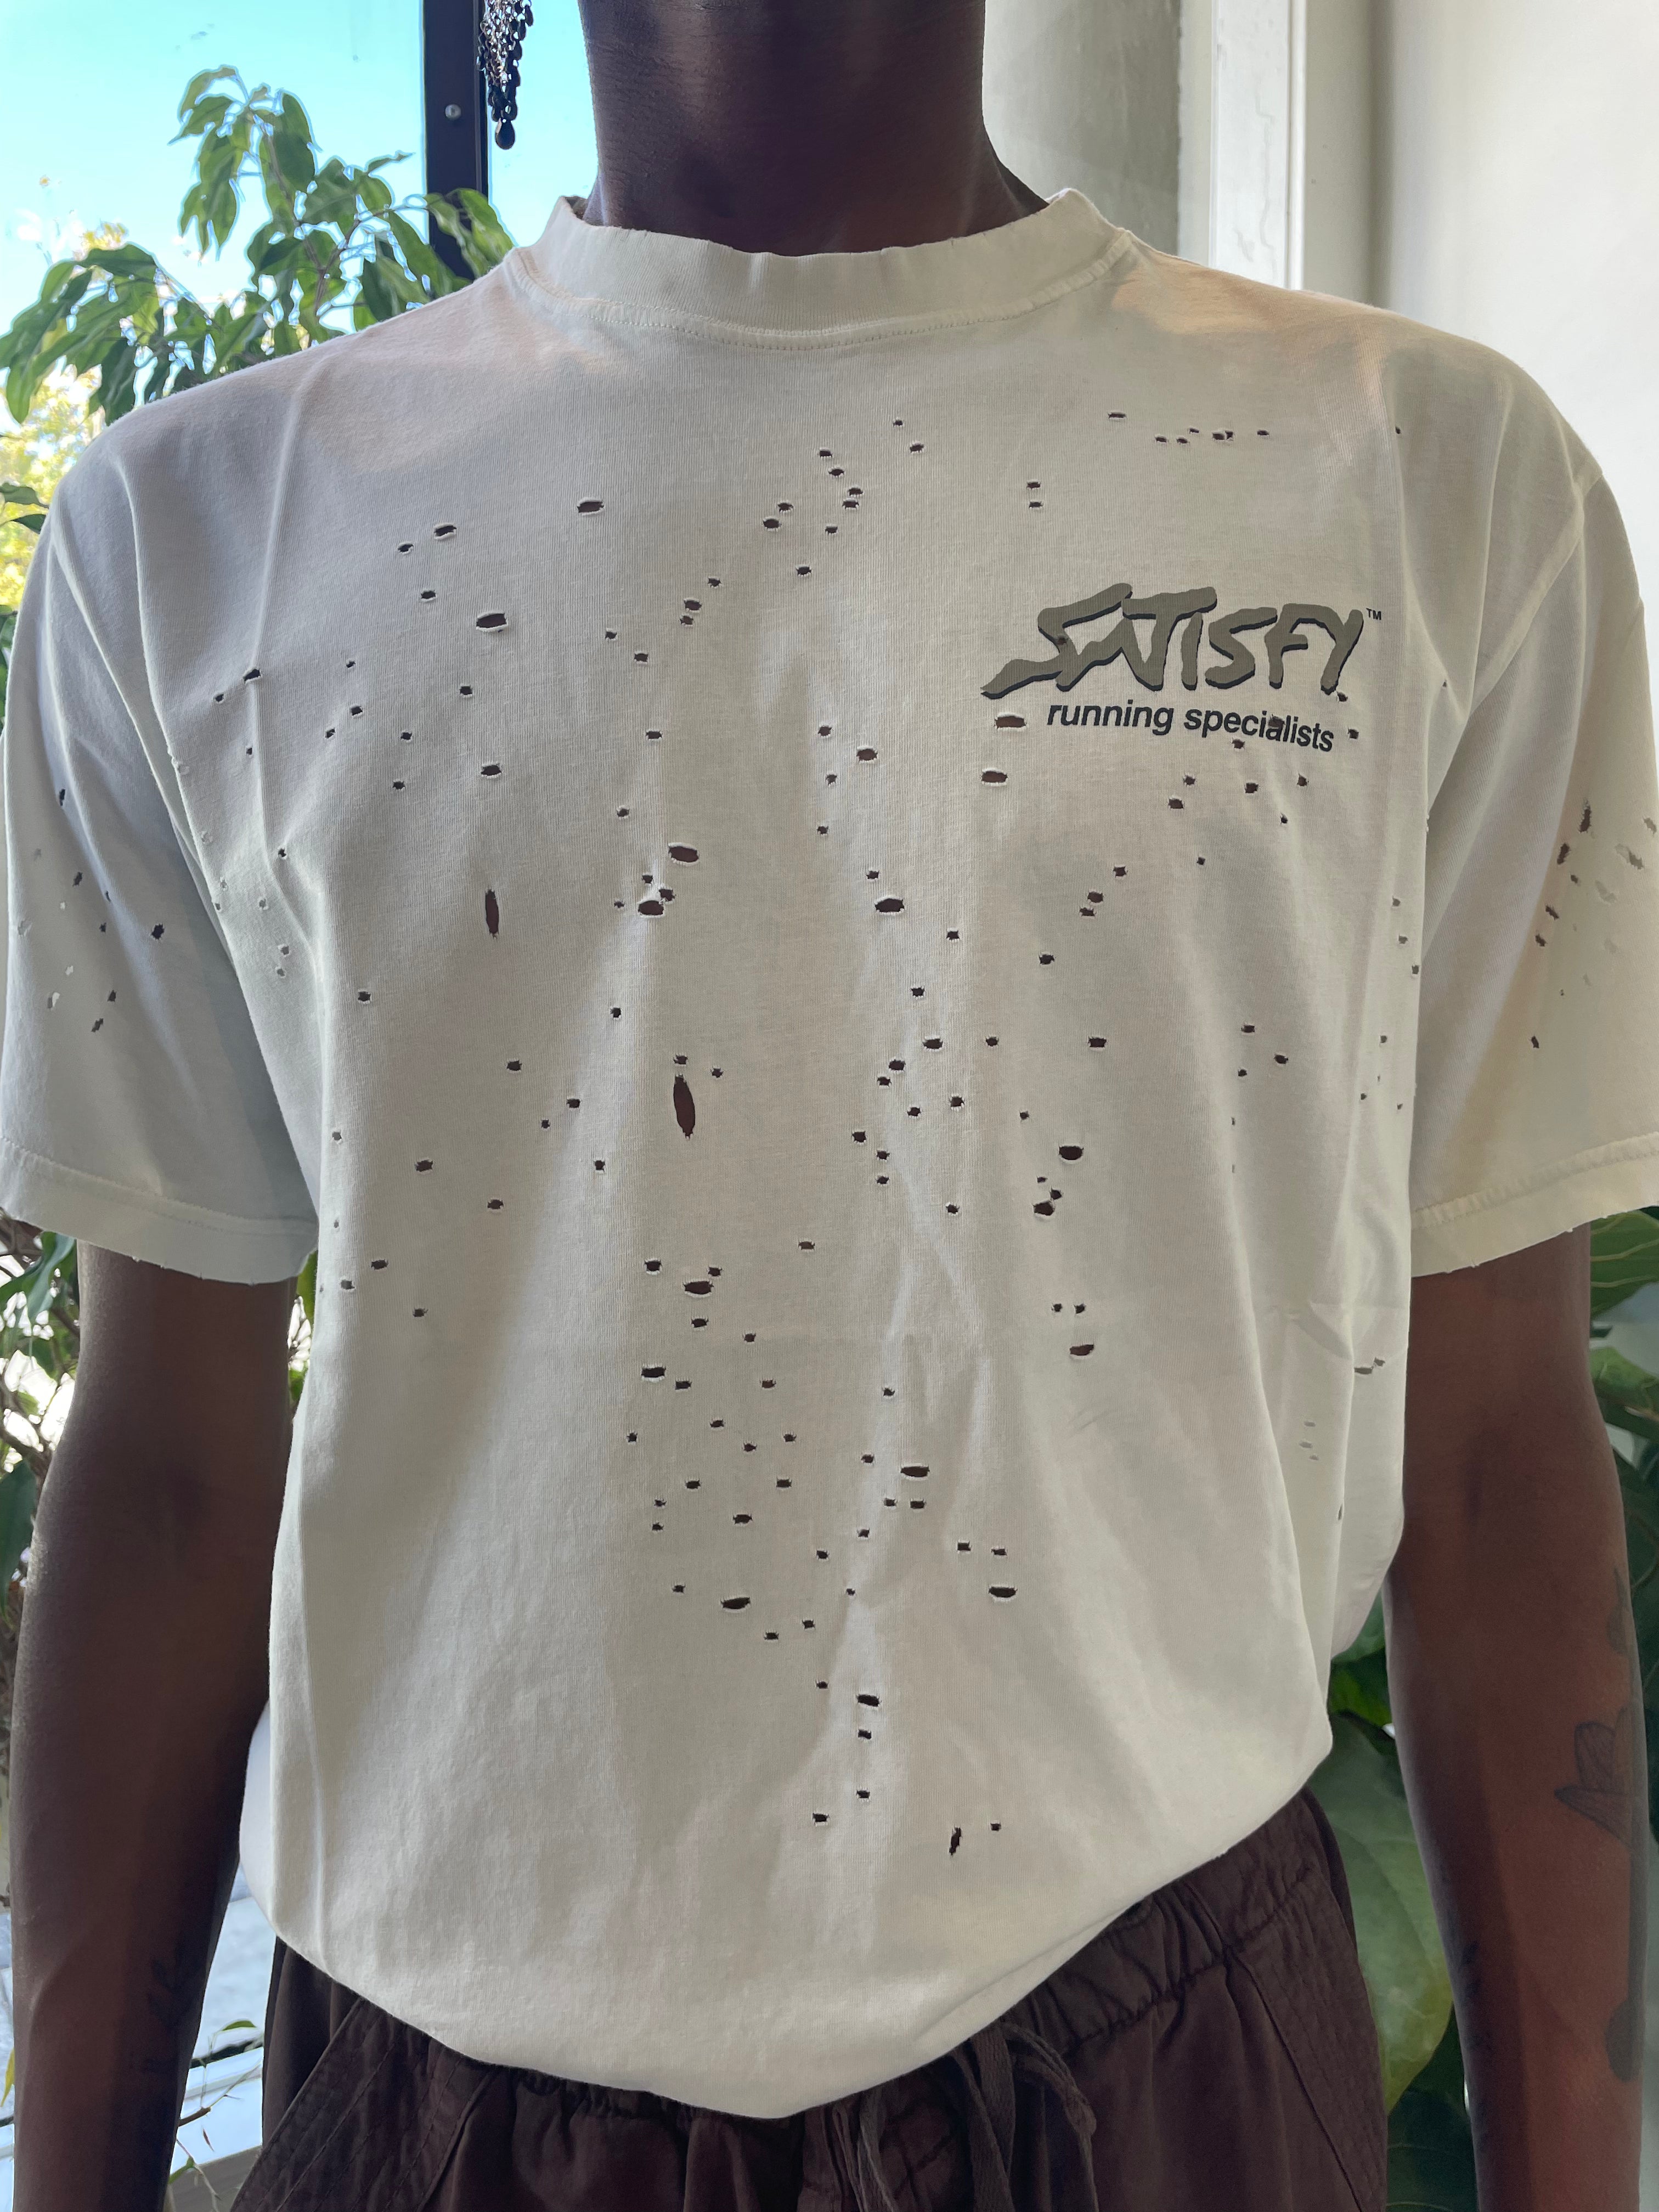 Satisfy MothTech™ T‑Shirt